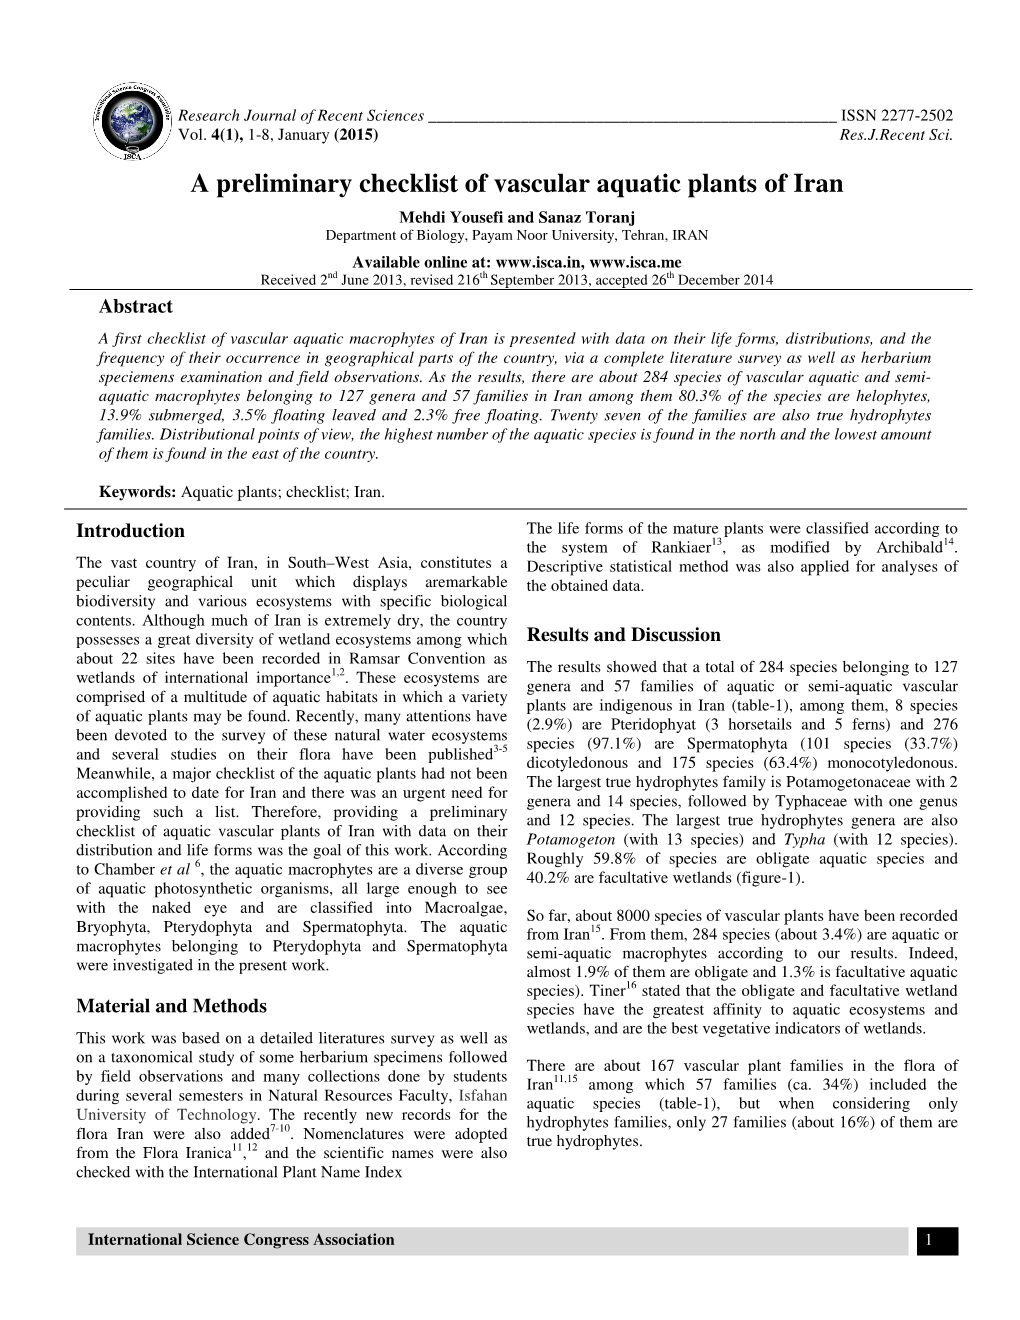 A Preliminary Checklist of Vascular Aquatic Plants of Iran